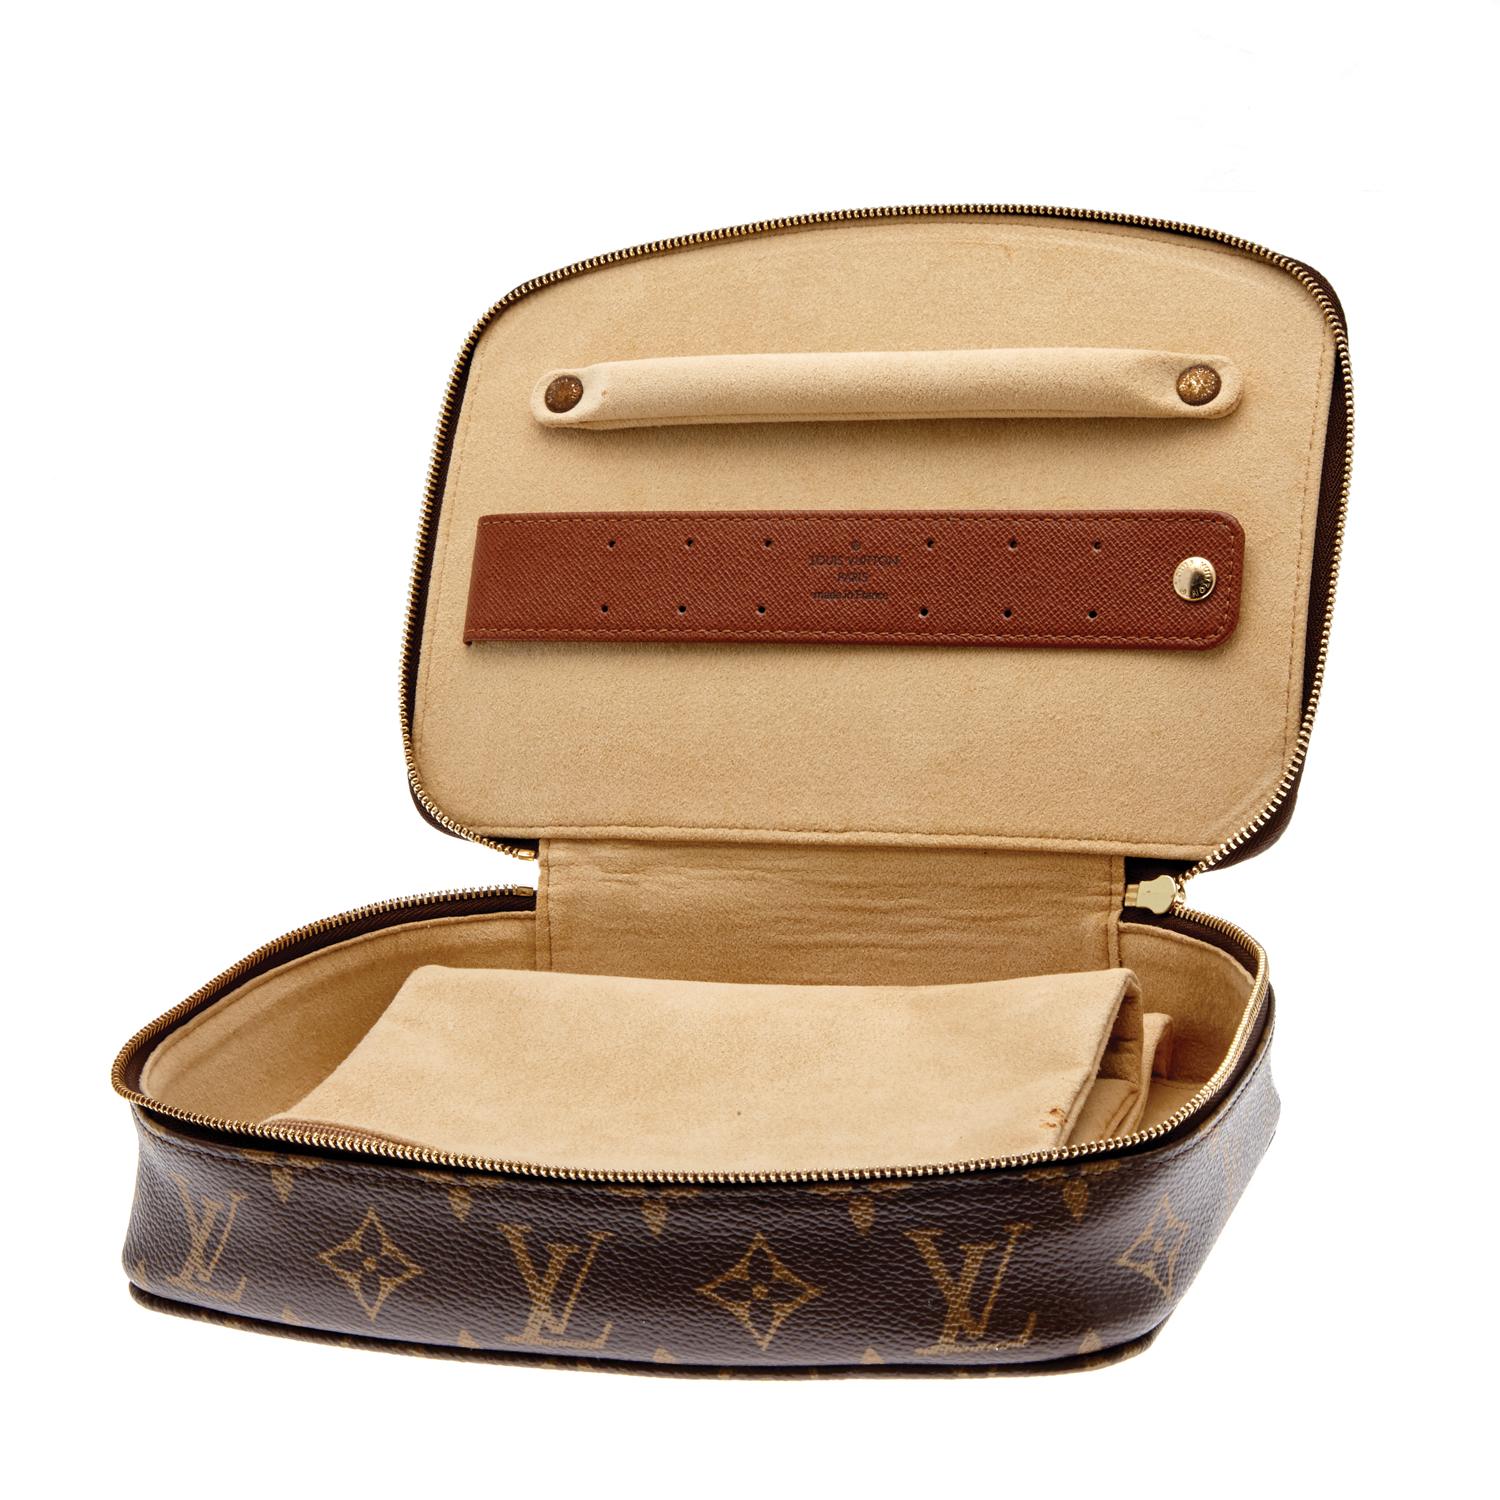 Vintage Louis Vuitton Monte Carlo Jewelry Case